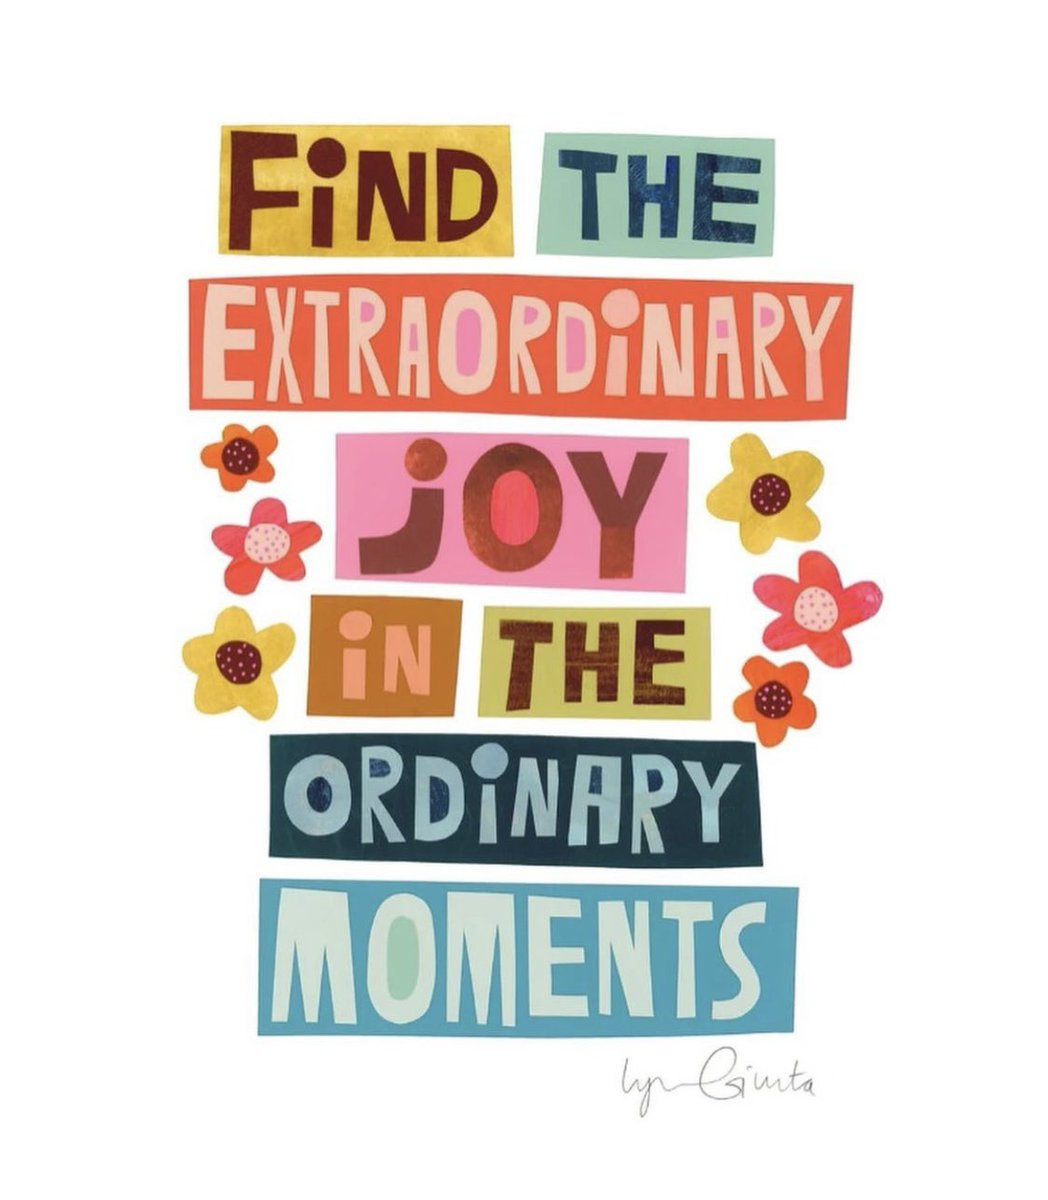 Find the extraordinary joy in the ordinary moments Image: instagram.com/lynn_giunta